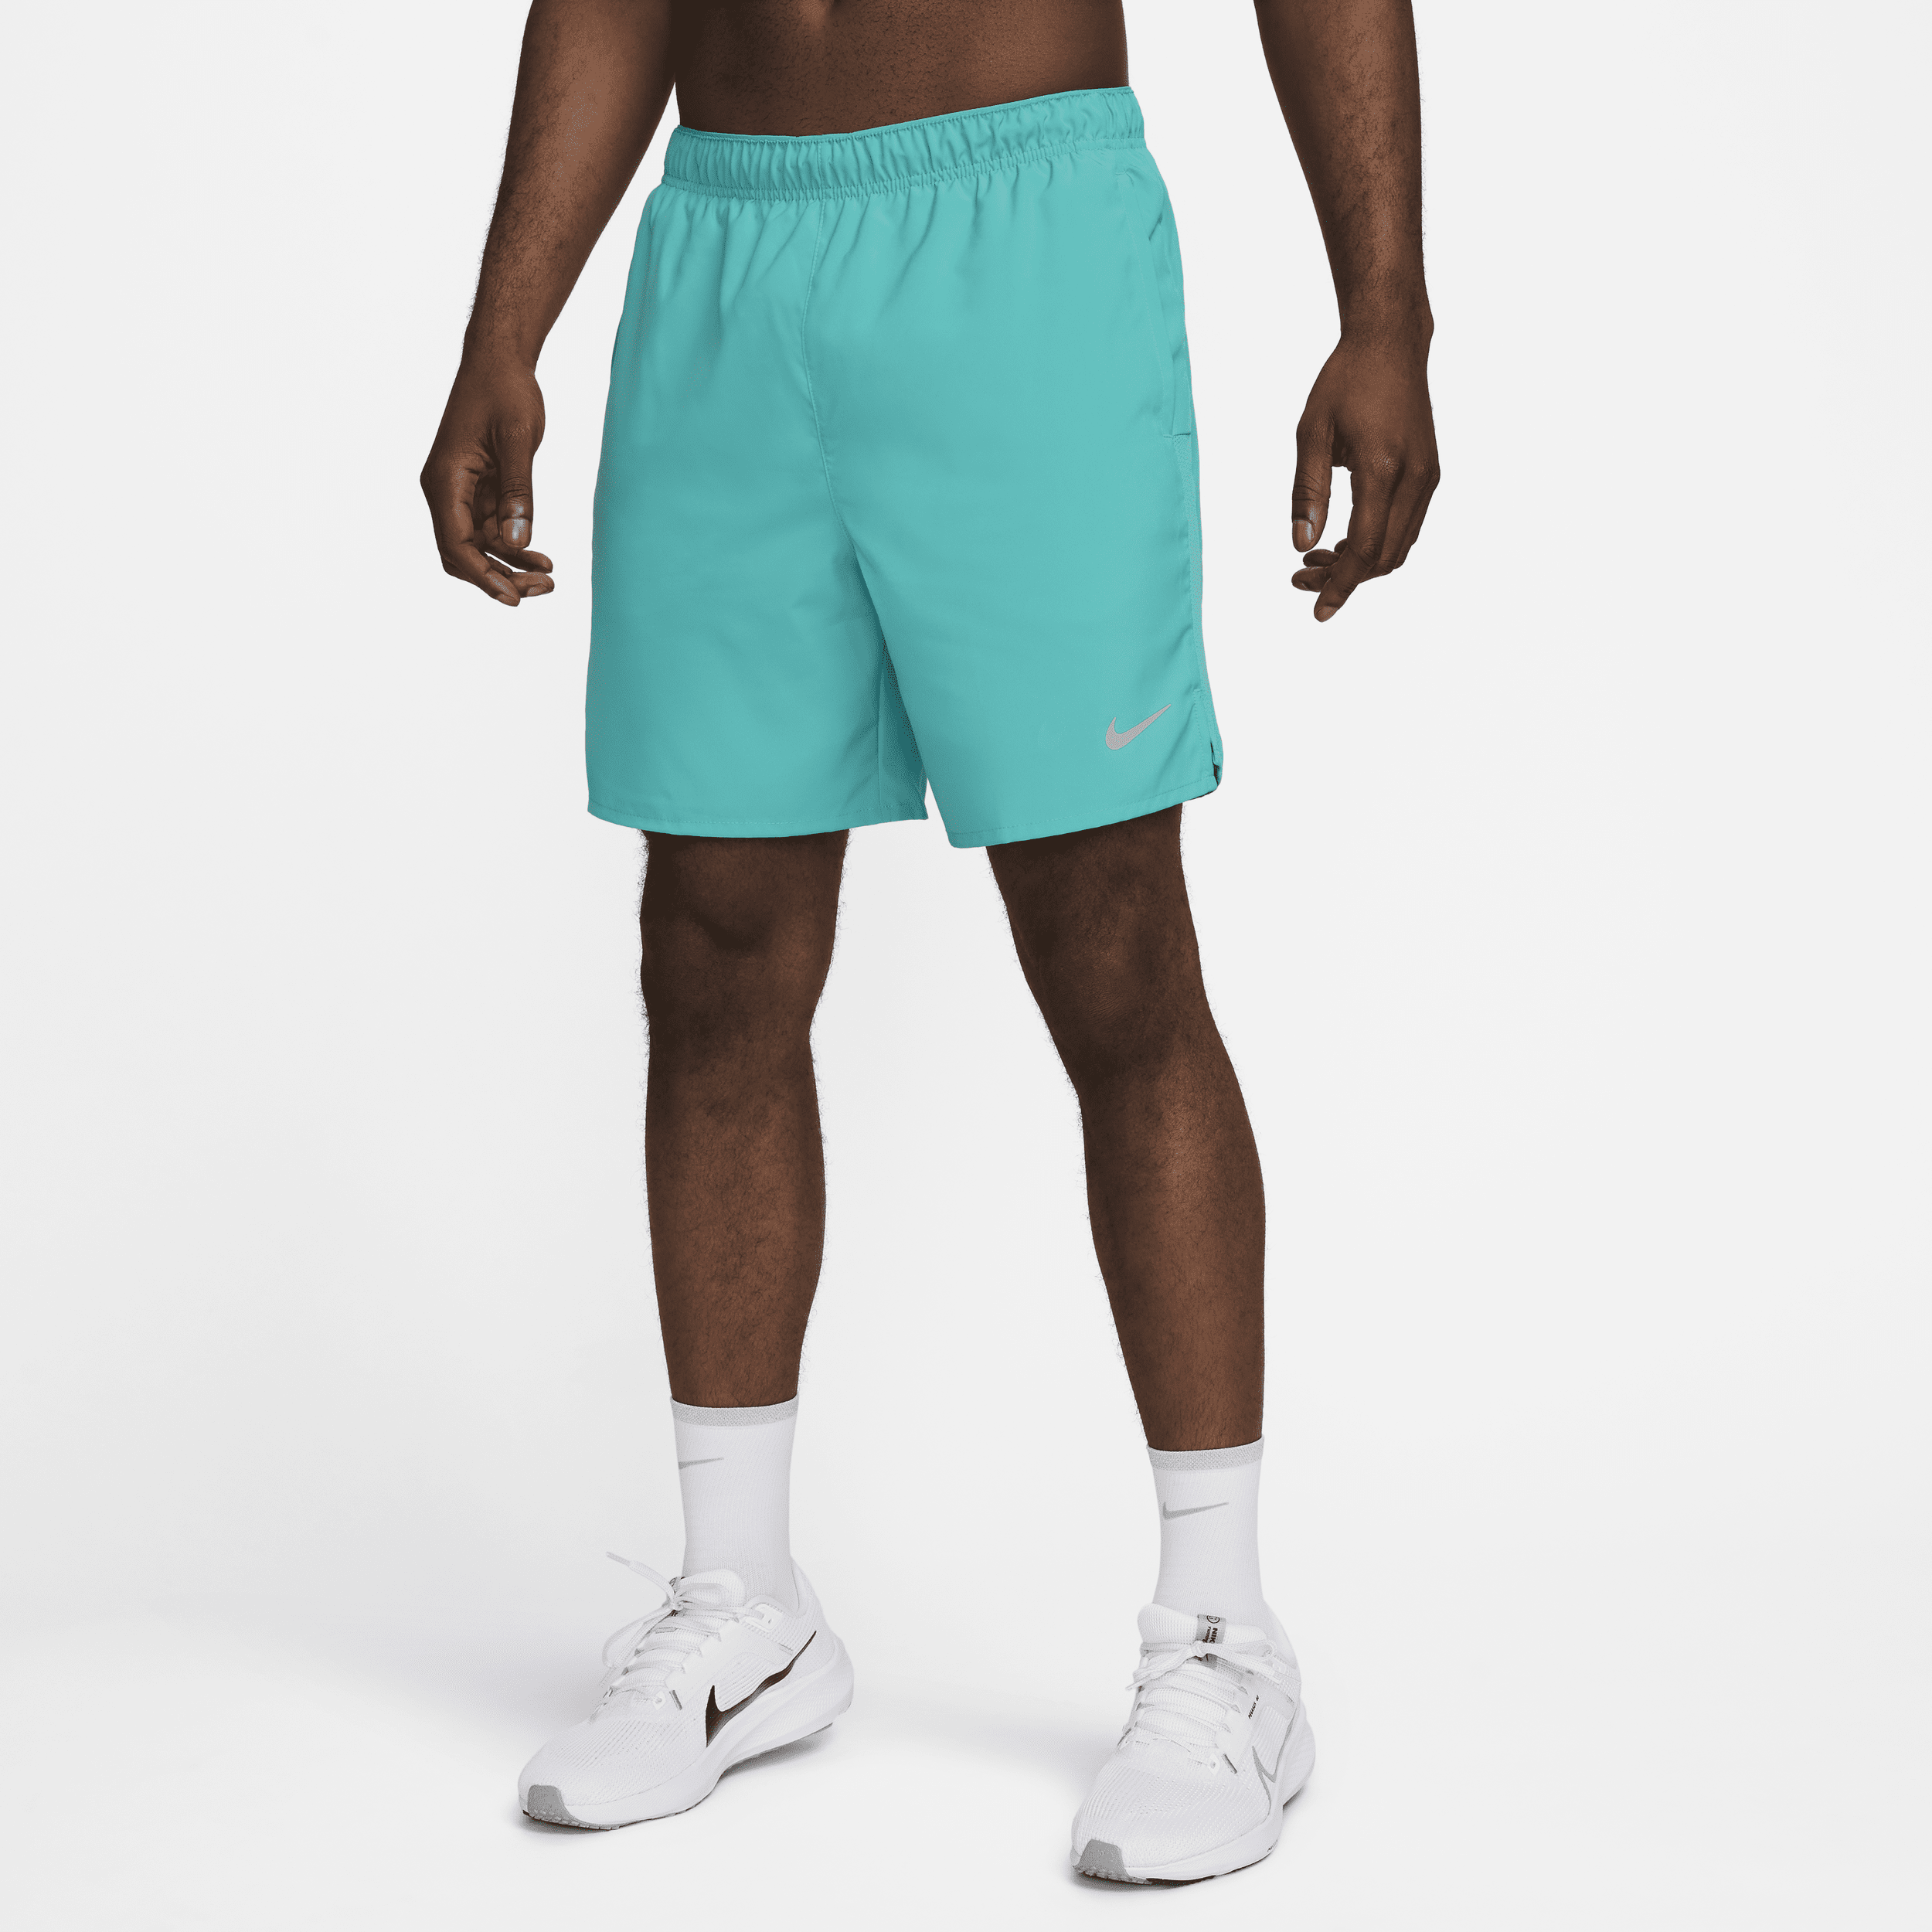 Shorts da running Dri-FIT con slip foderati 18 cm Nike Challenger – Uomo - Verde